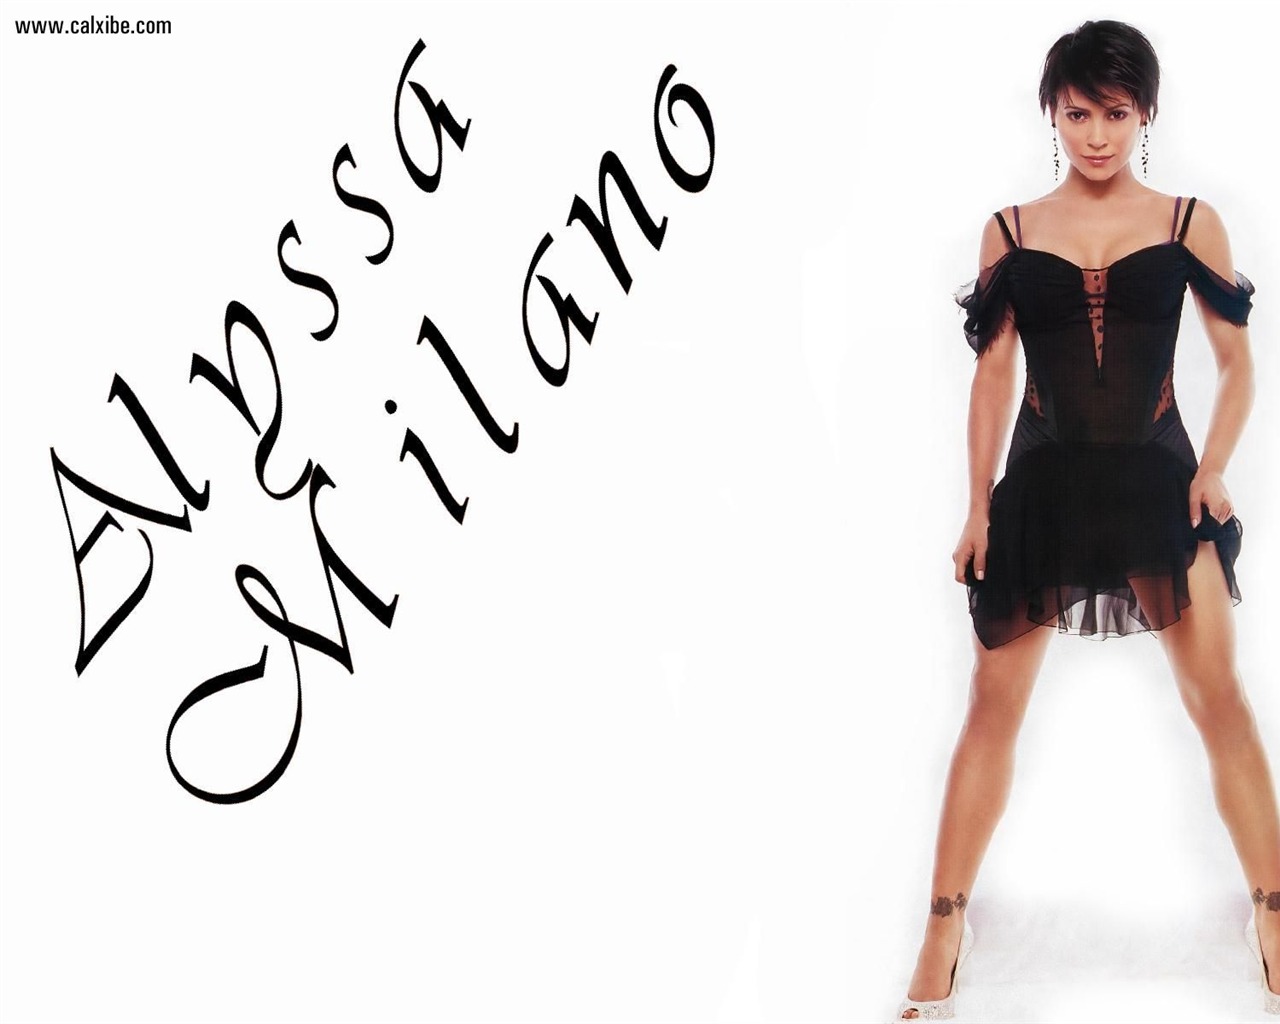 Alyssa Milano beau fond d'écran (2) #25 - 1280x1024